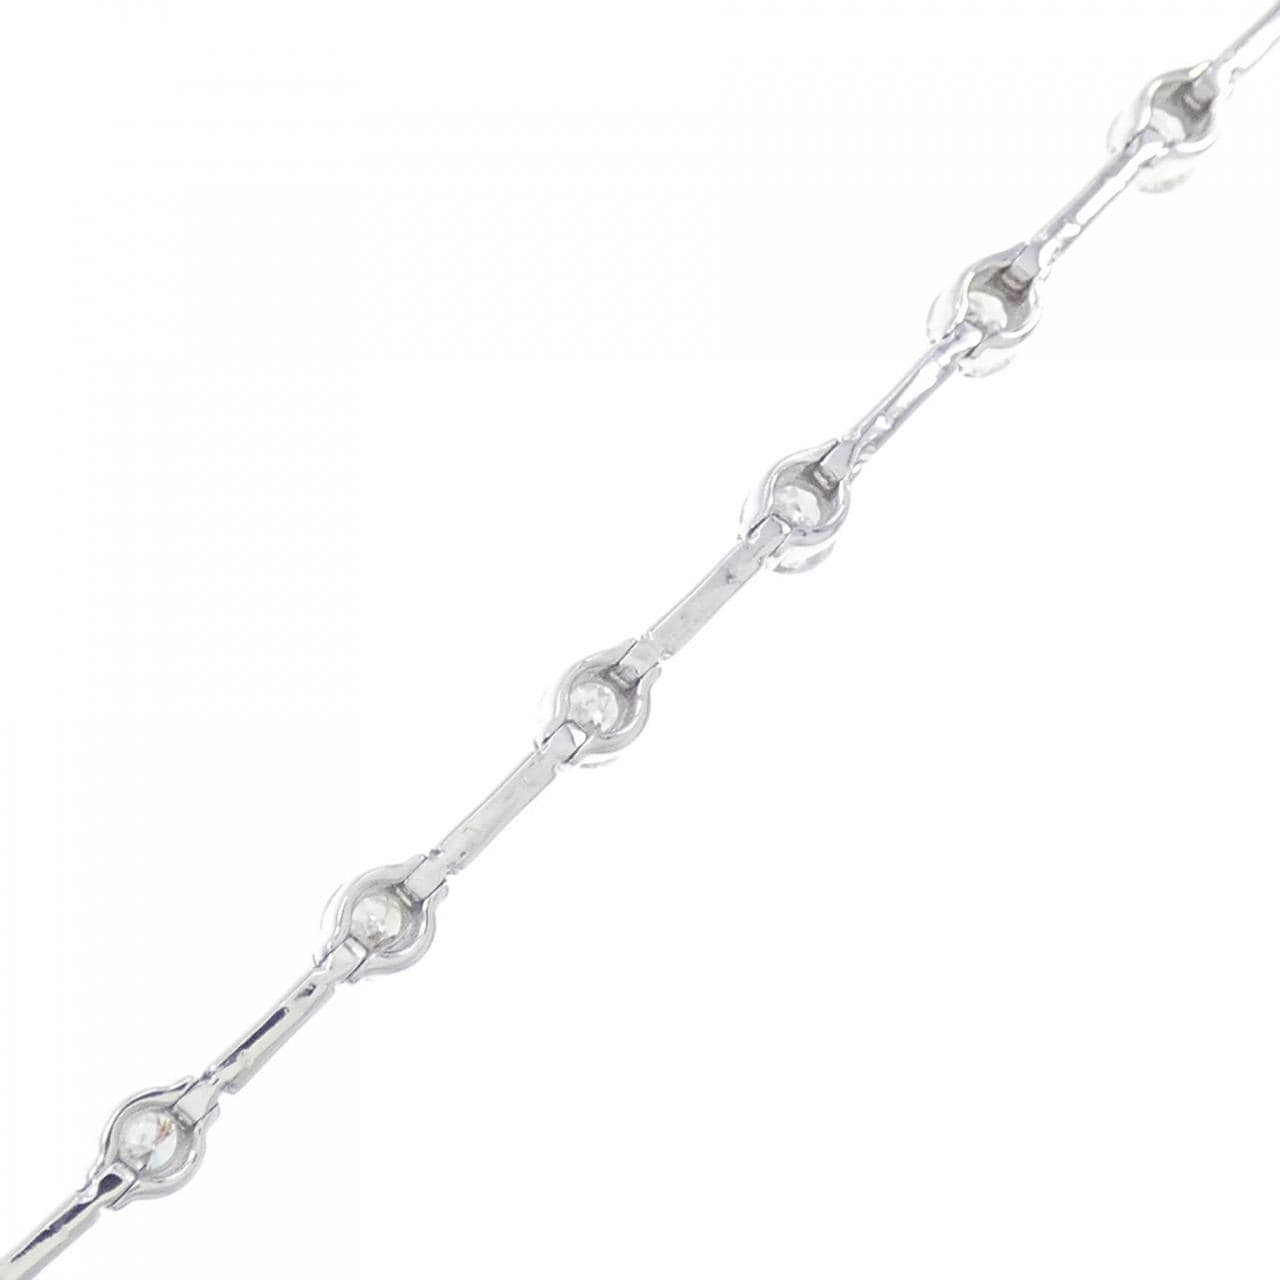 K18WG Diamond bracelet 2.31CT